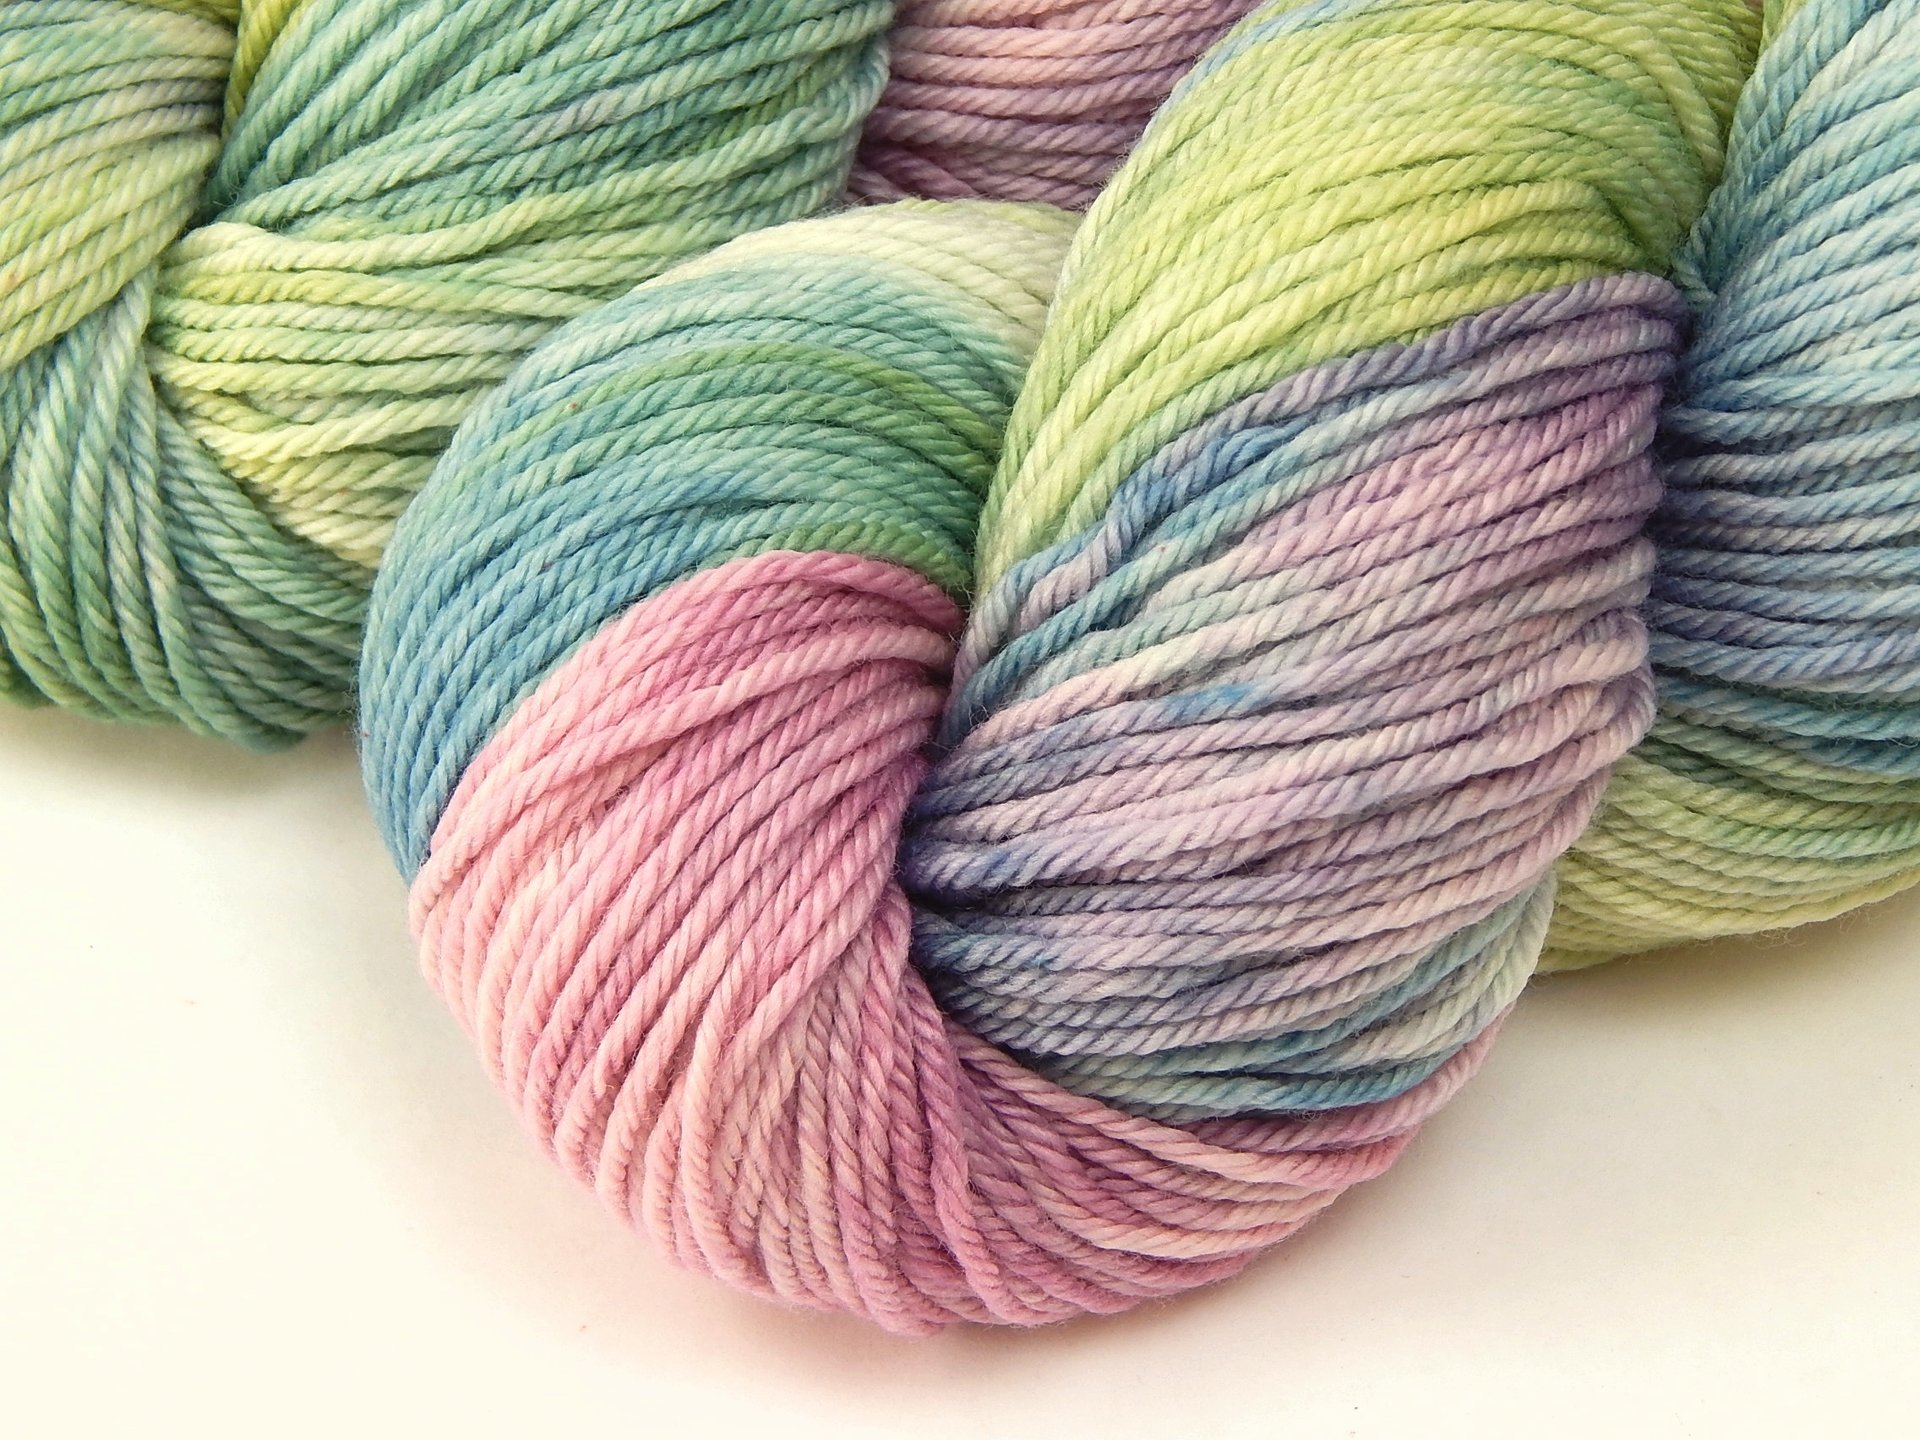 Hand Dyed Yarn - Worsted Weight 100% Superwash Merino Wool - Potluck Pastels - Indie Dyer OOAK Knitting Crochet Yarn, Blue Green Purple Pink 